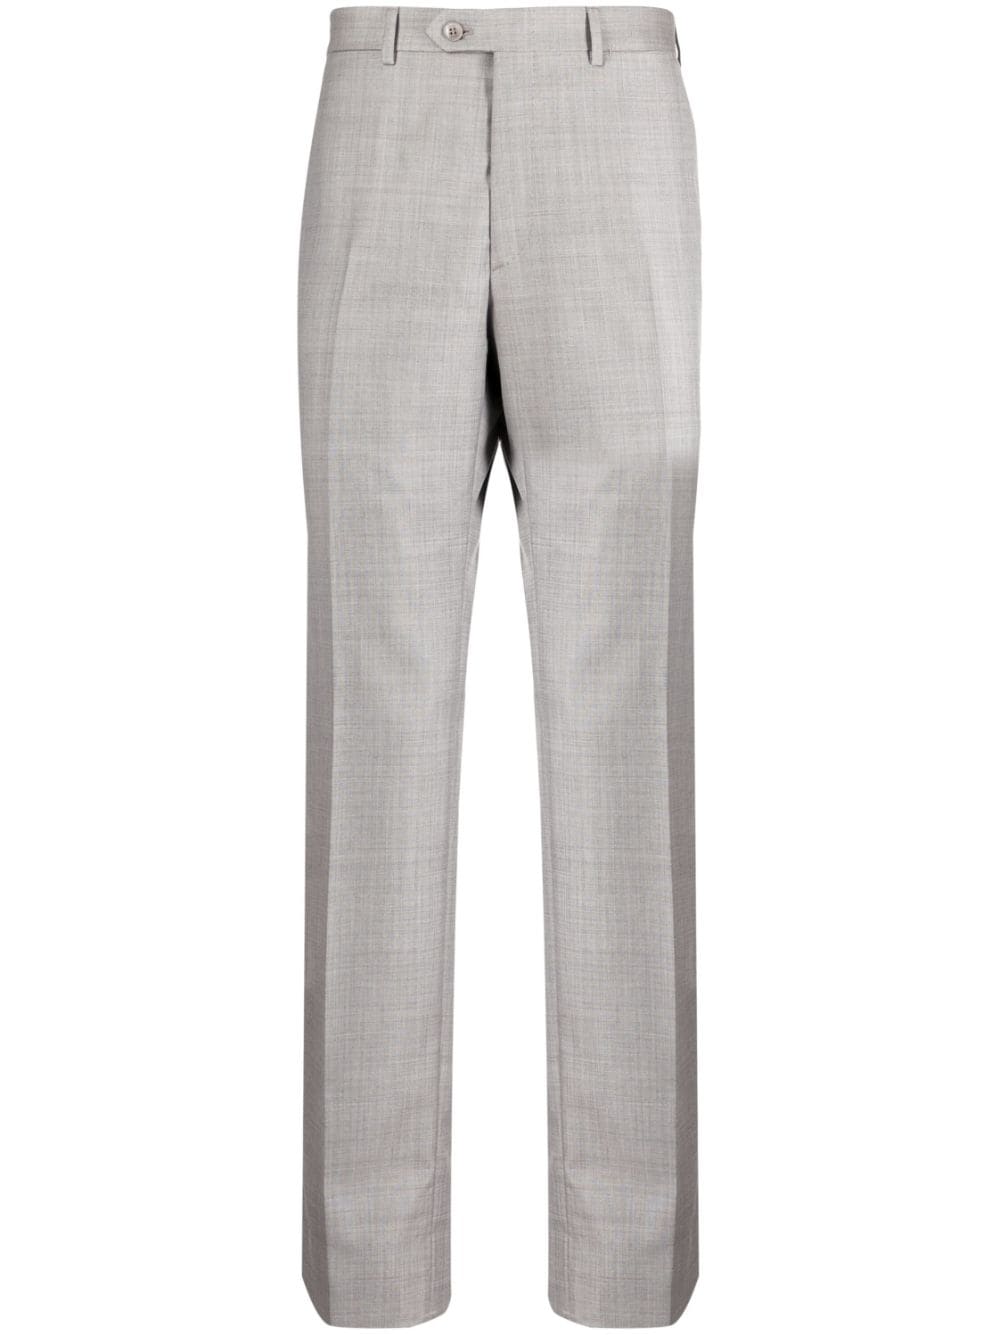 Brioni tailored dress trousers - Grey von Brioni